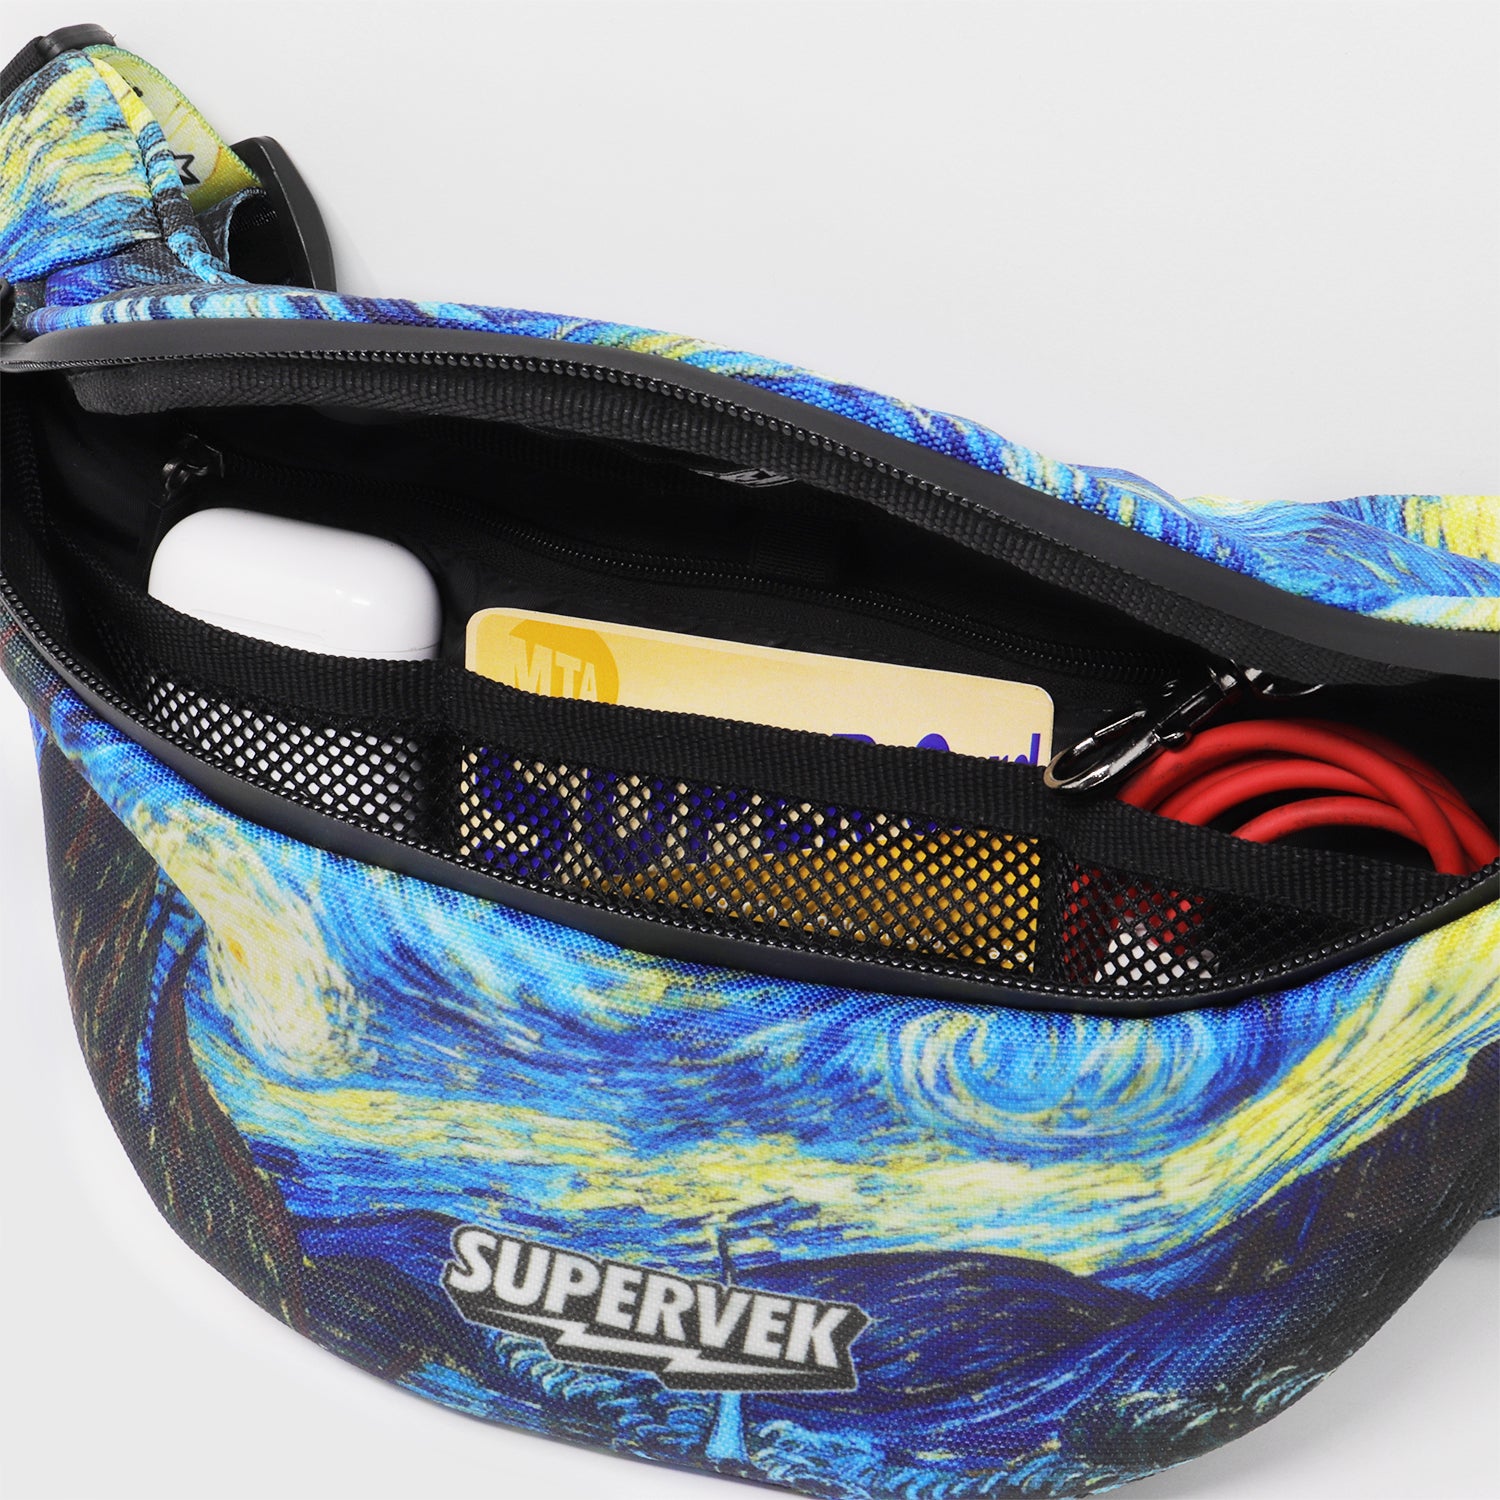 Supervek Crossbody Slinger - Starry Night - Urban Functional Fanny Hip Bag for Everyday Essentials - Inside